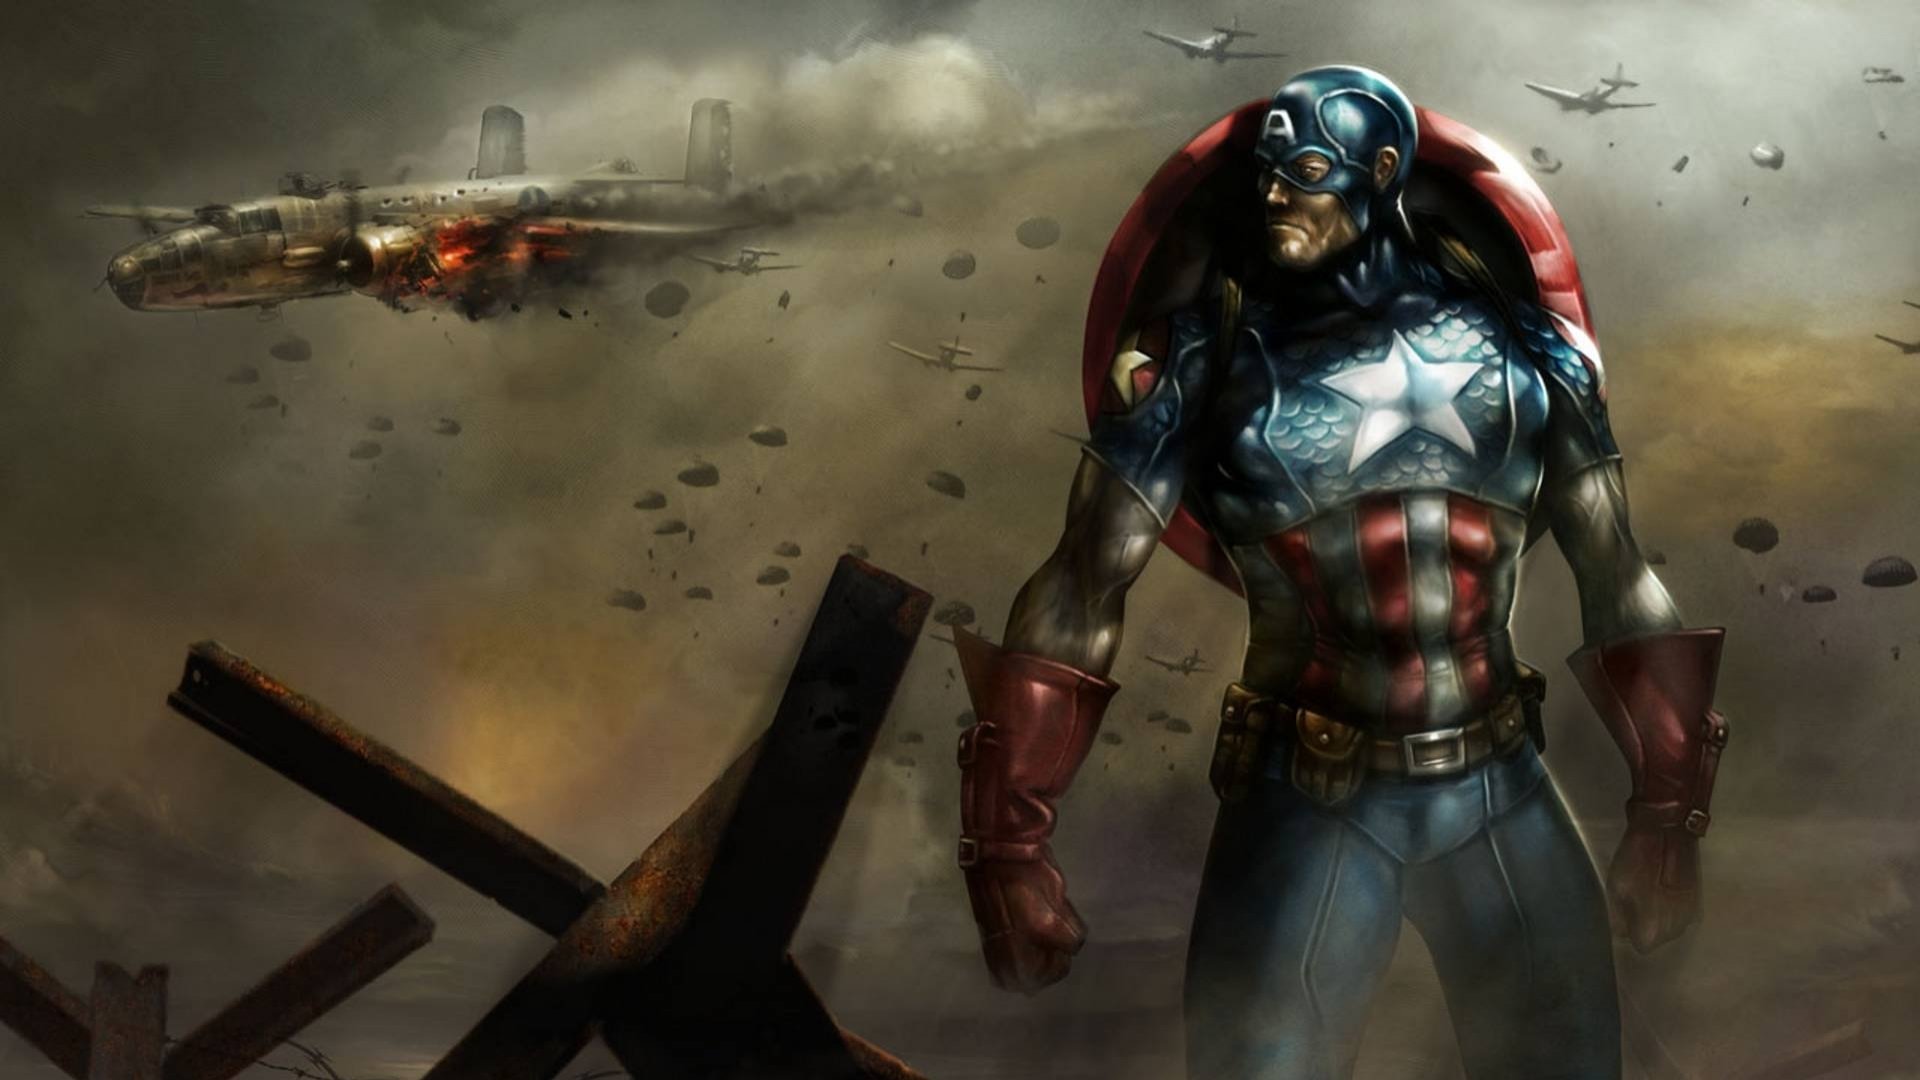 High resolution Captain America (Marvel comics) hd 1920x1080 background ID:292841 for desktop